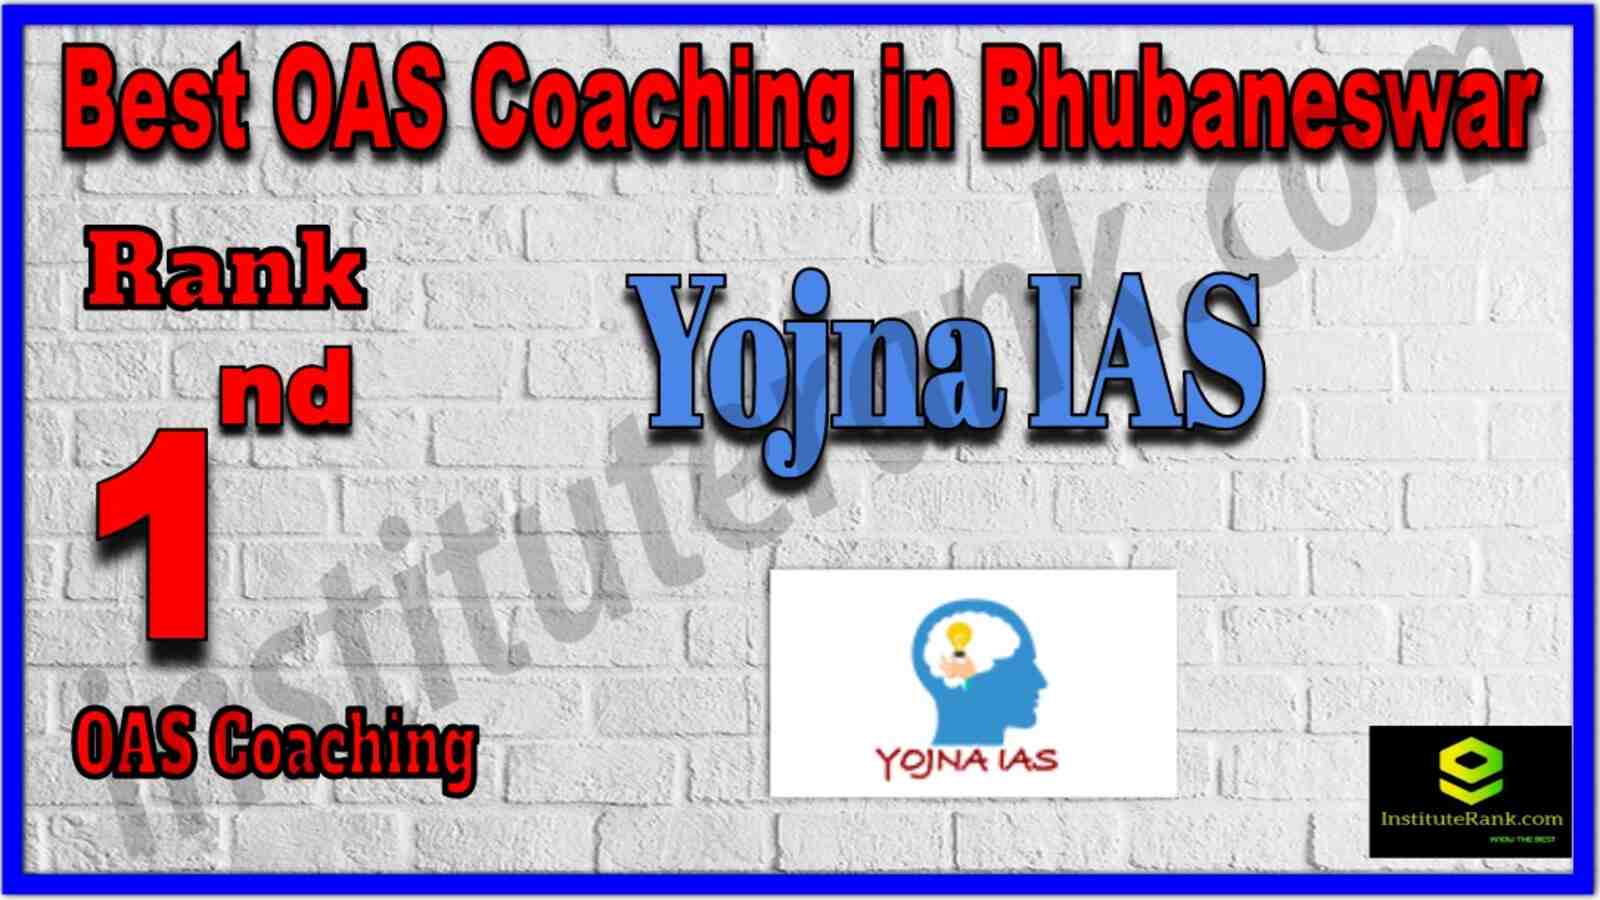 Rank 1 Best OAS Coaching in Bhubaneswar